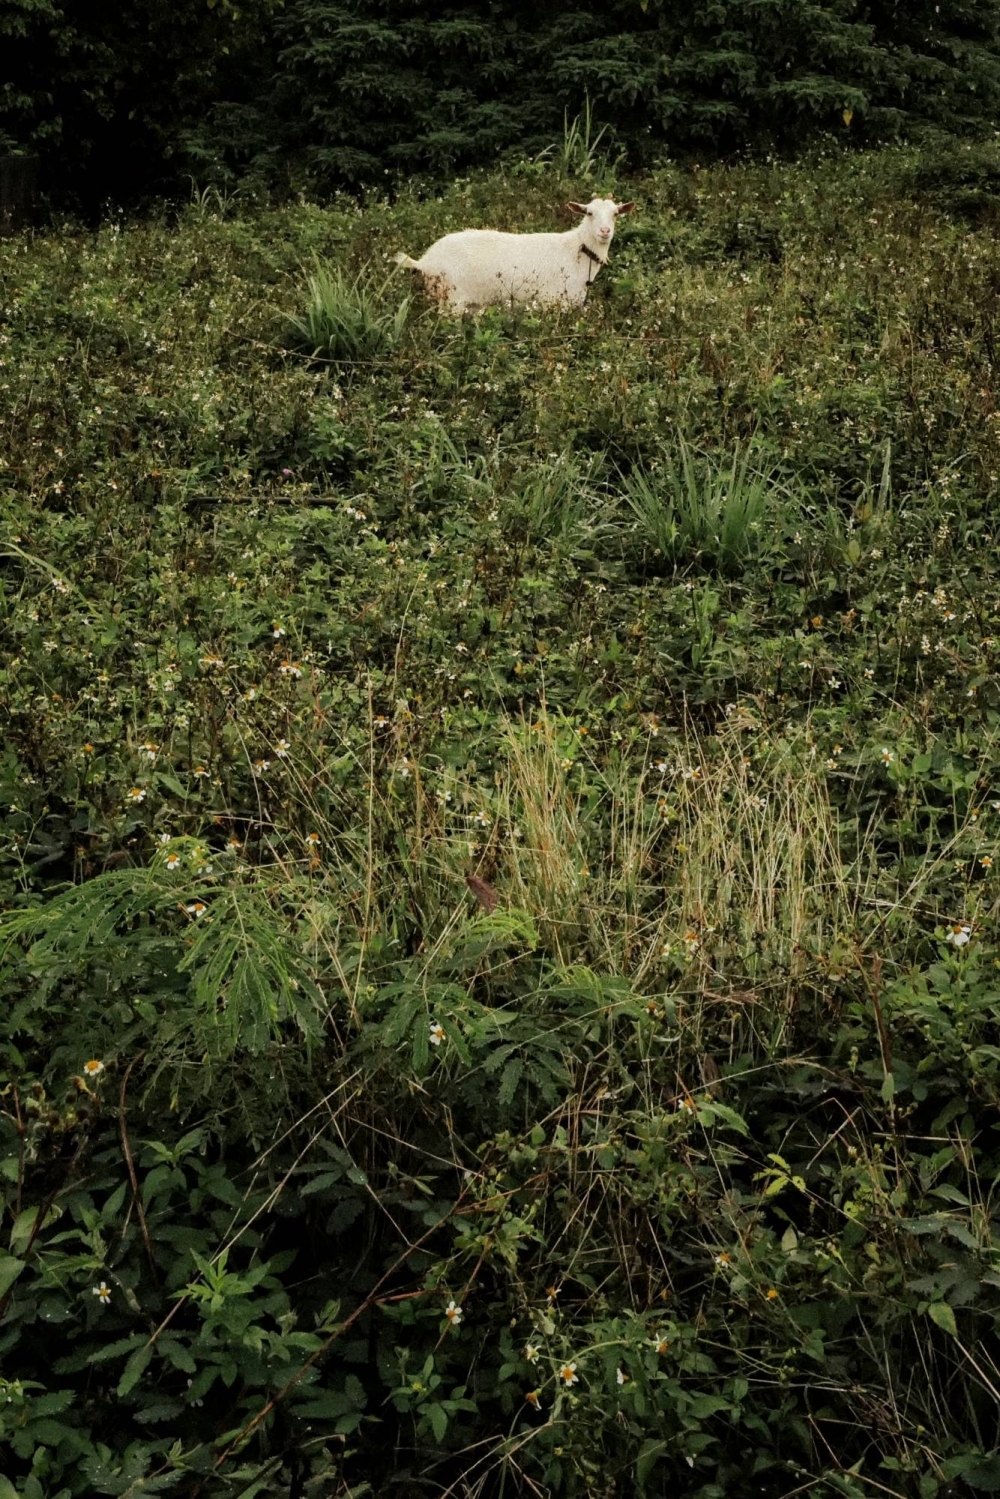 A goat grazes in a backyard on Taketomi Island. Goats, called 